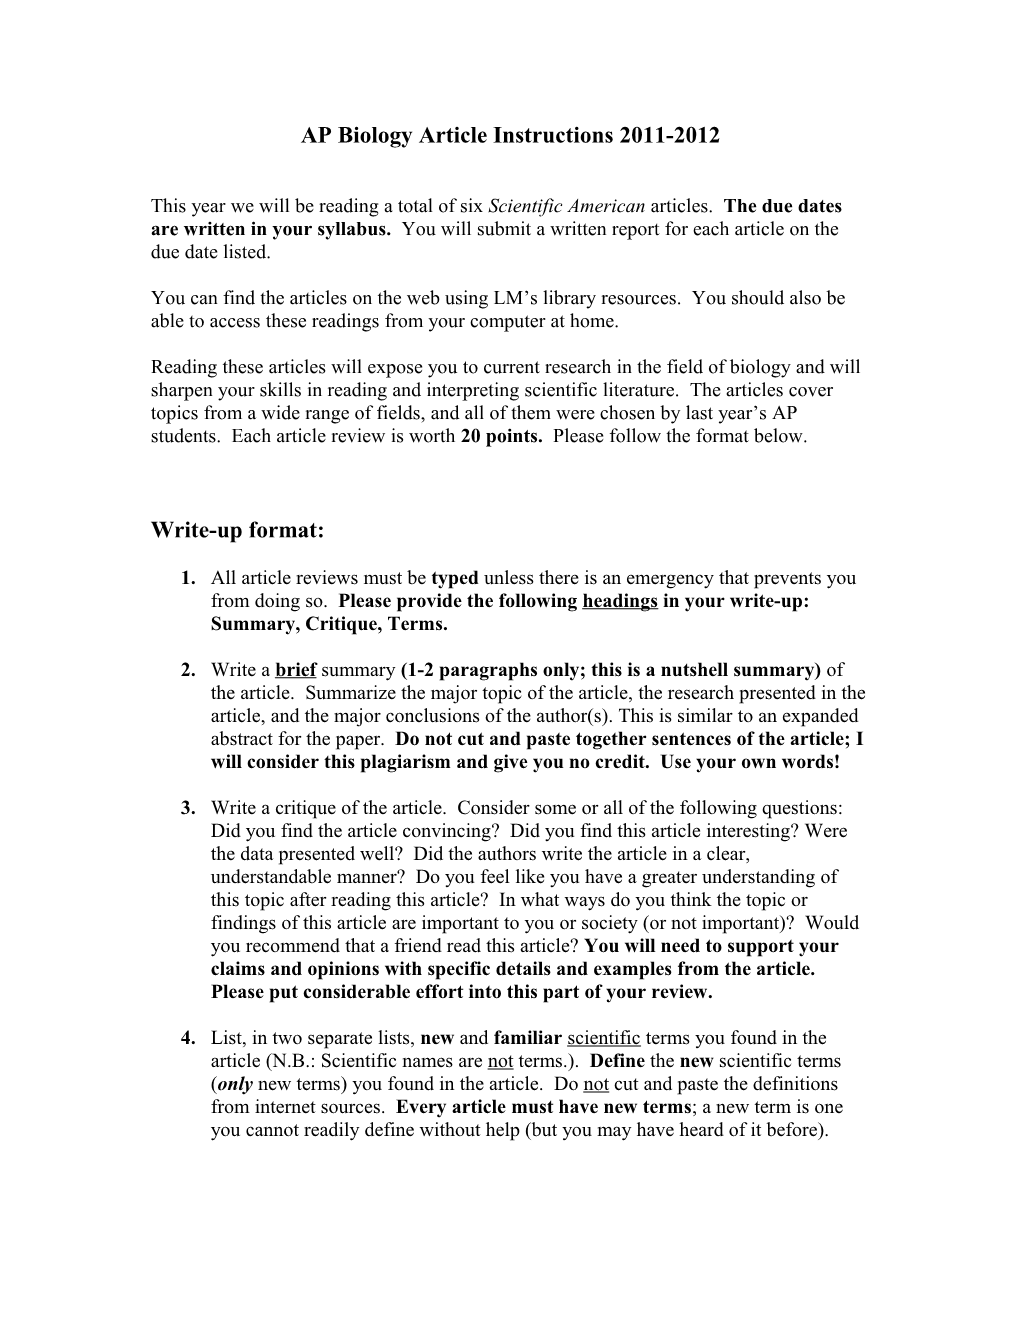 AP Biology Article Instructions 2006-2007